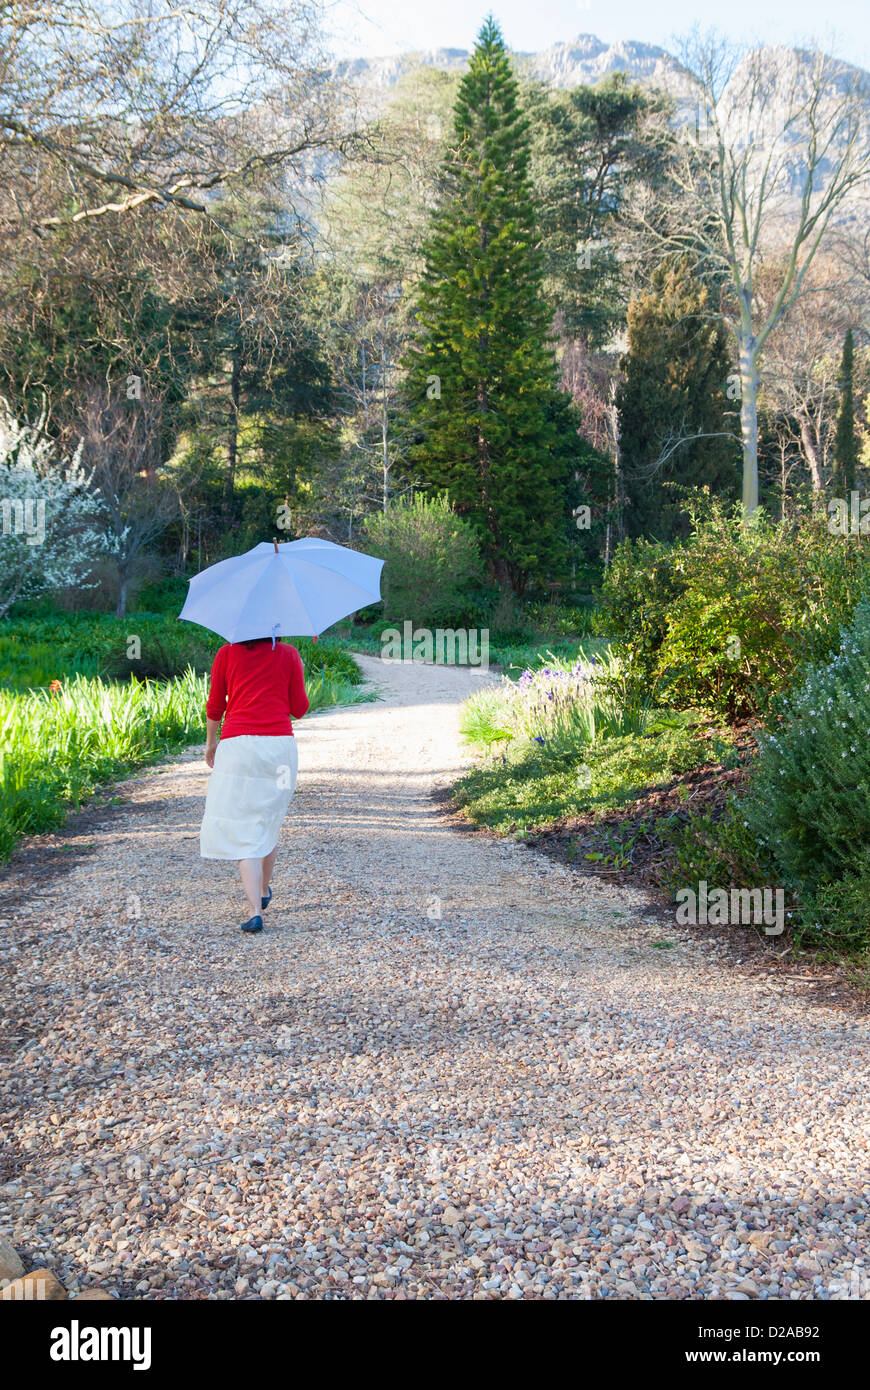 Woman carrying umbrella outdoors Stock Photo